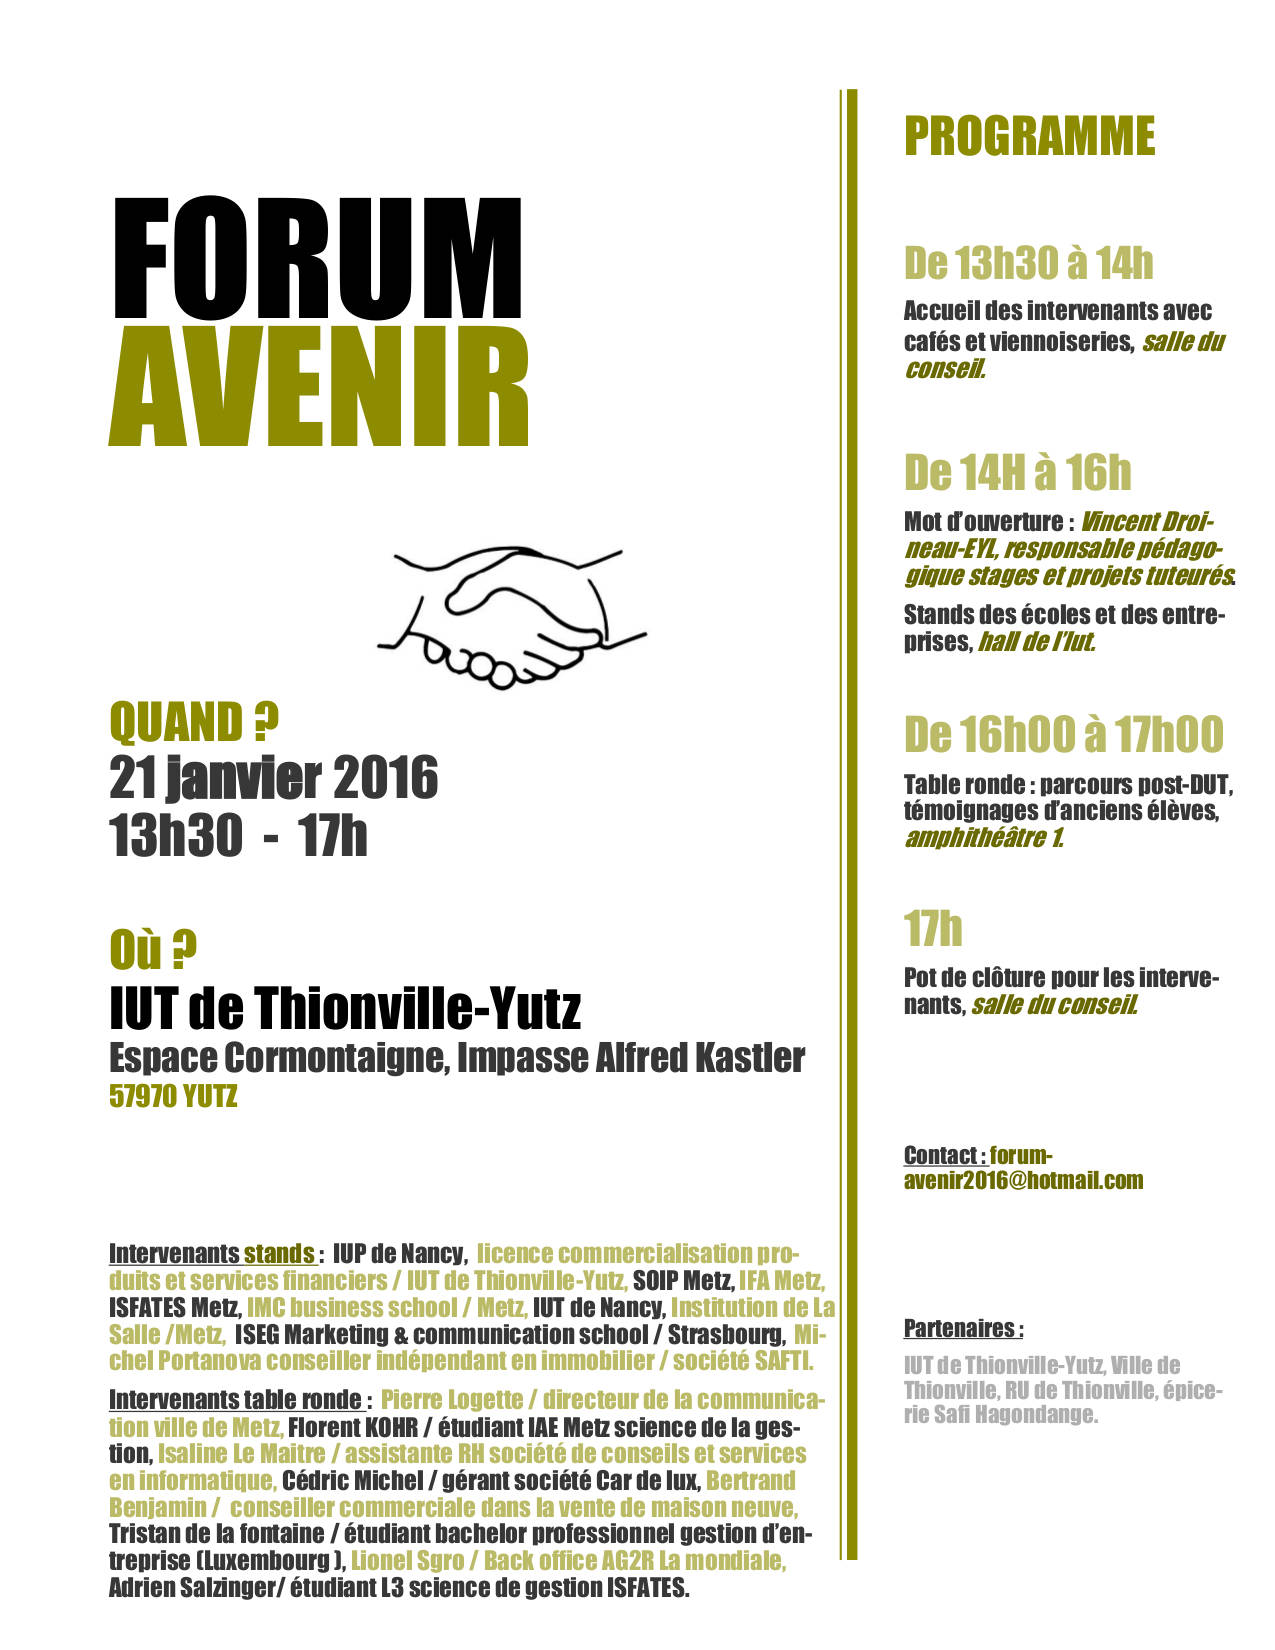 Forum Avenir - jeudi 21 janvier 2016 - 13h30 à 17h00